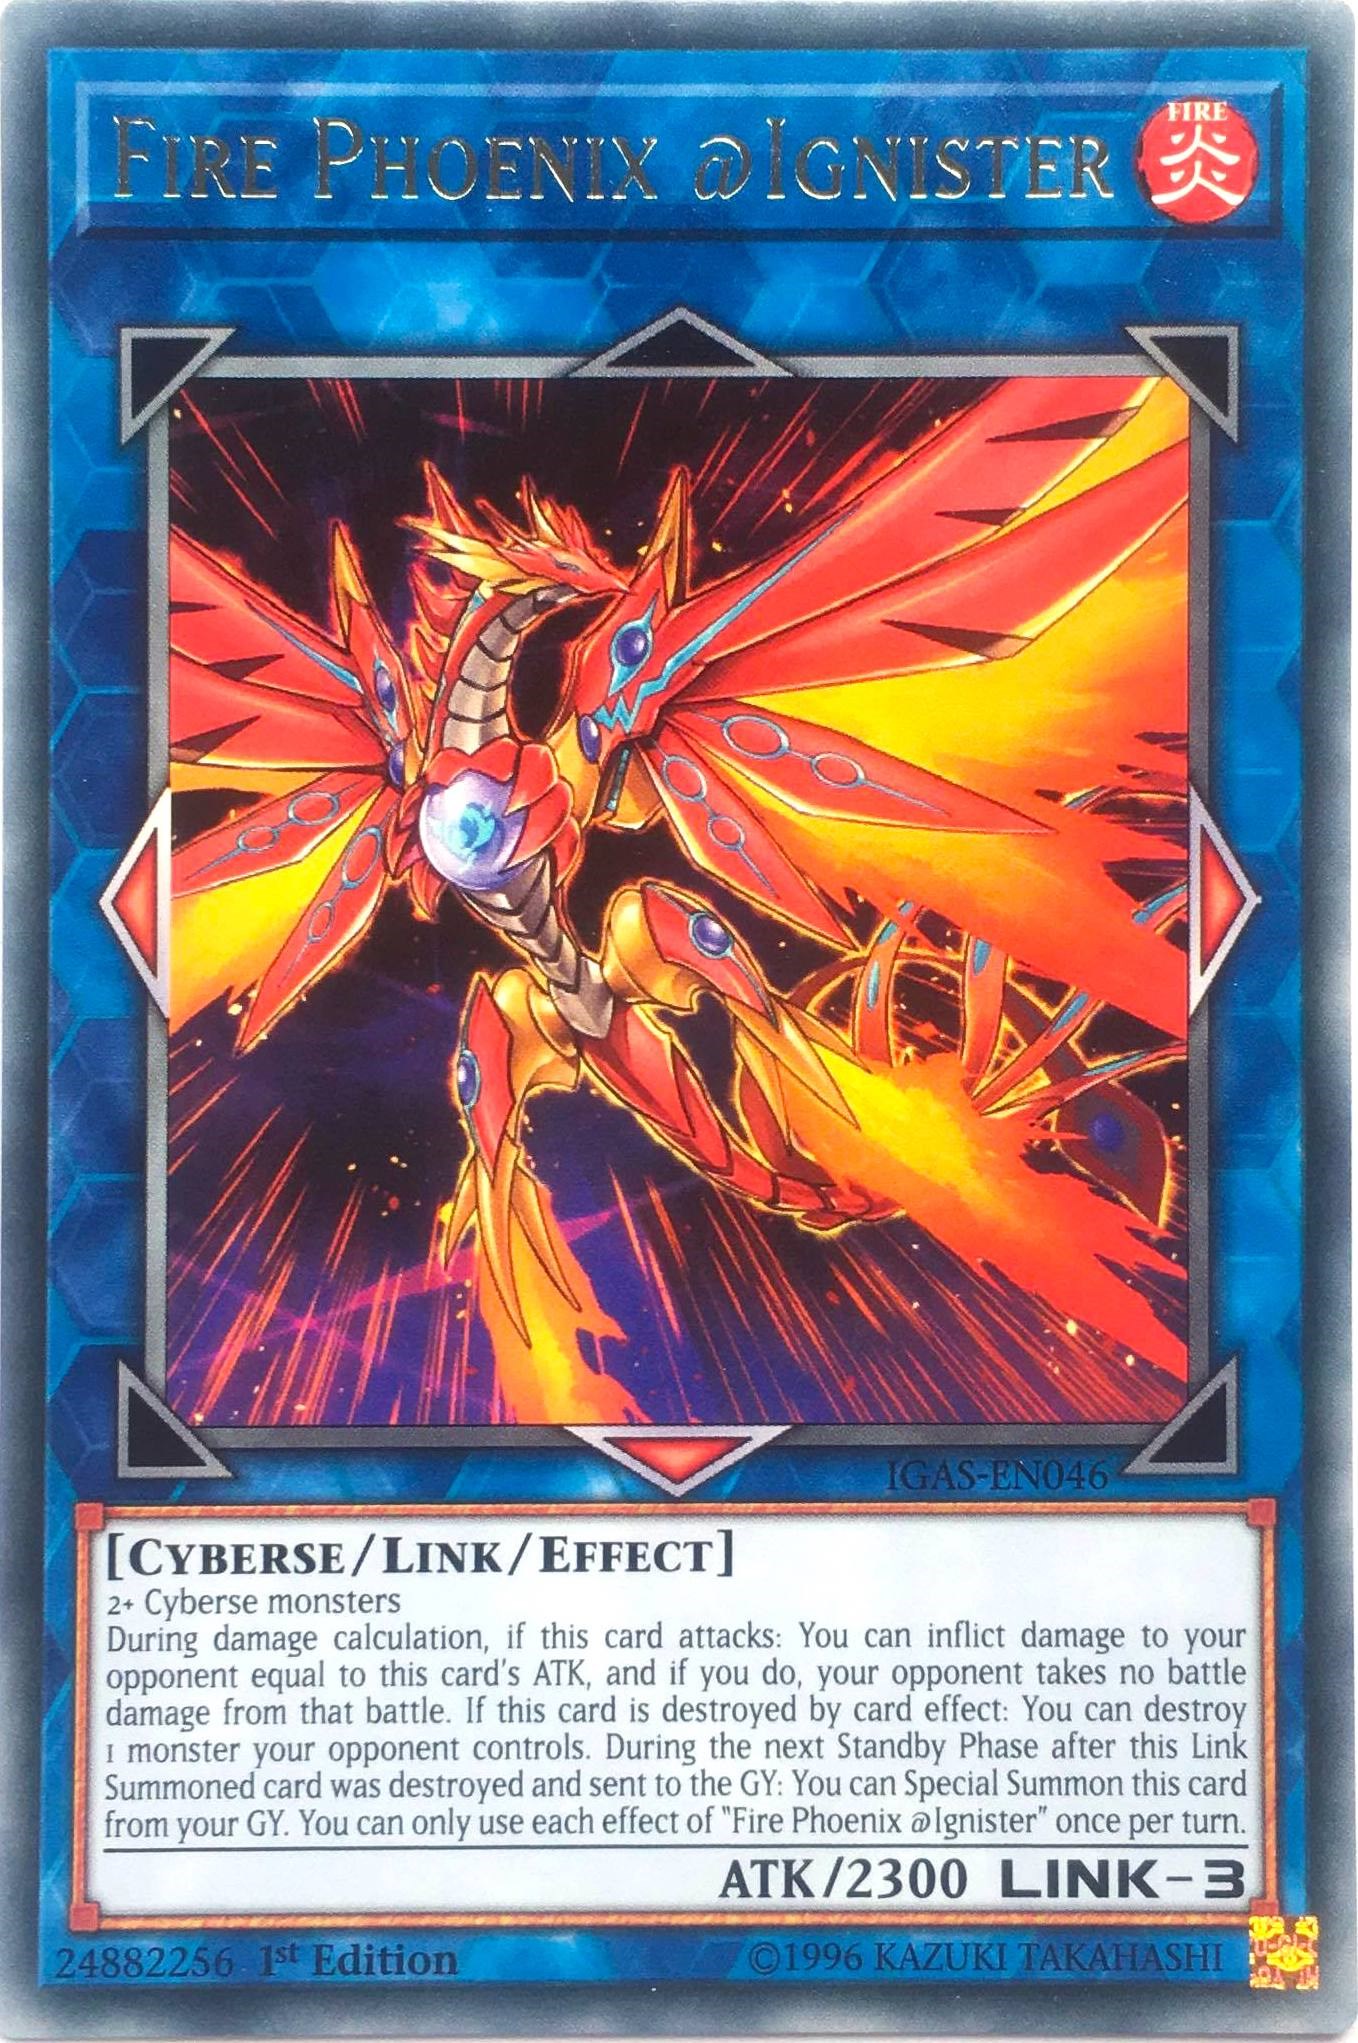 Fire Phoenix Ignister Ignition Assault YuGiOh